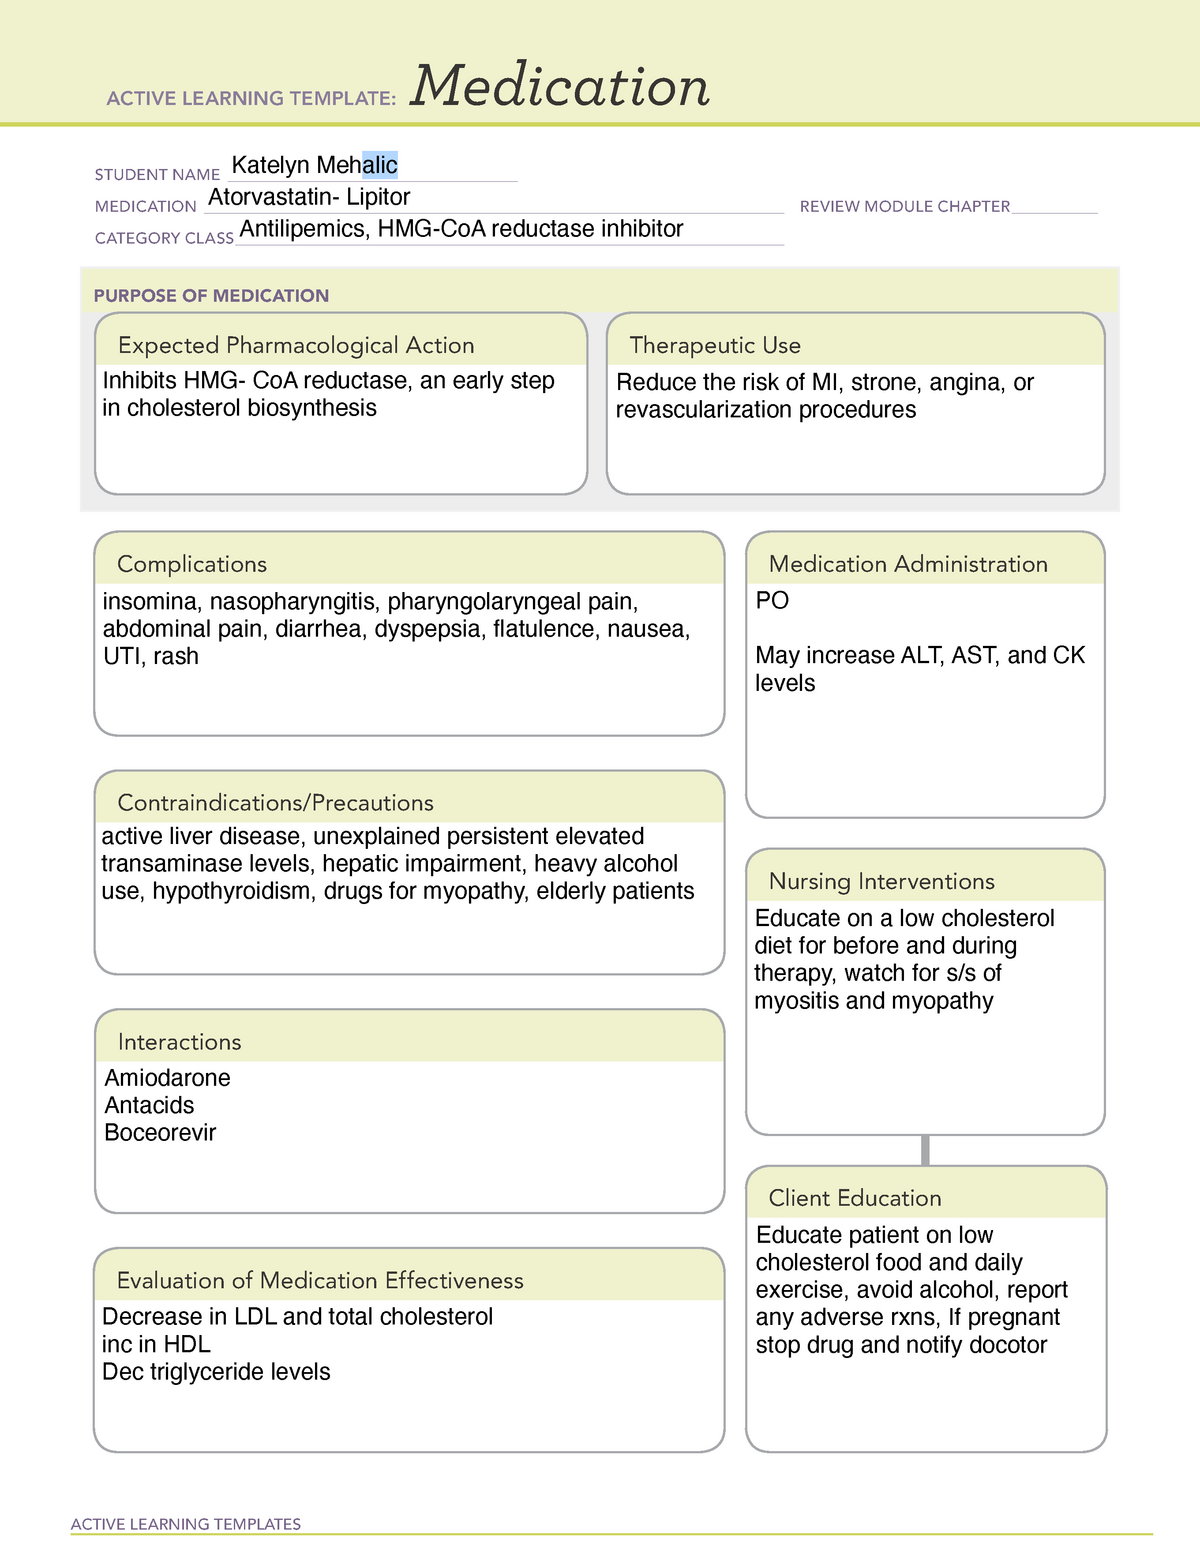 ati-medication-template-atorvastatin